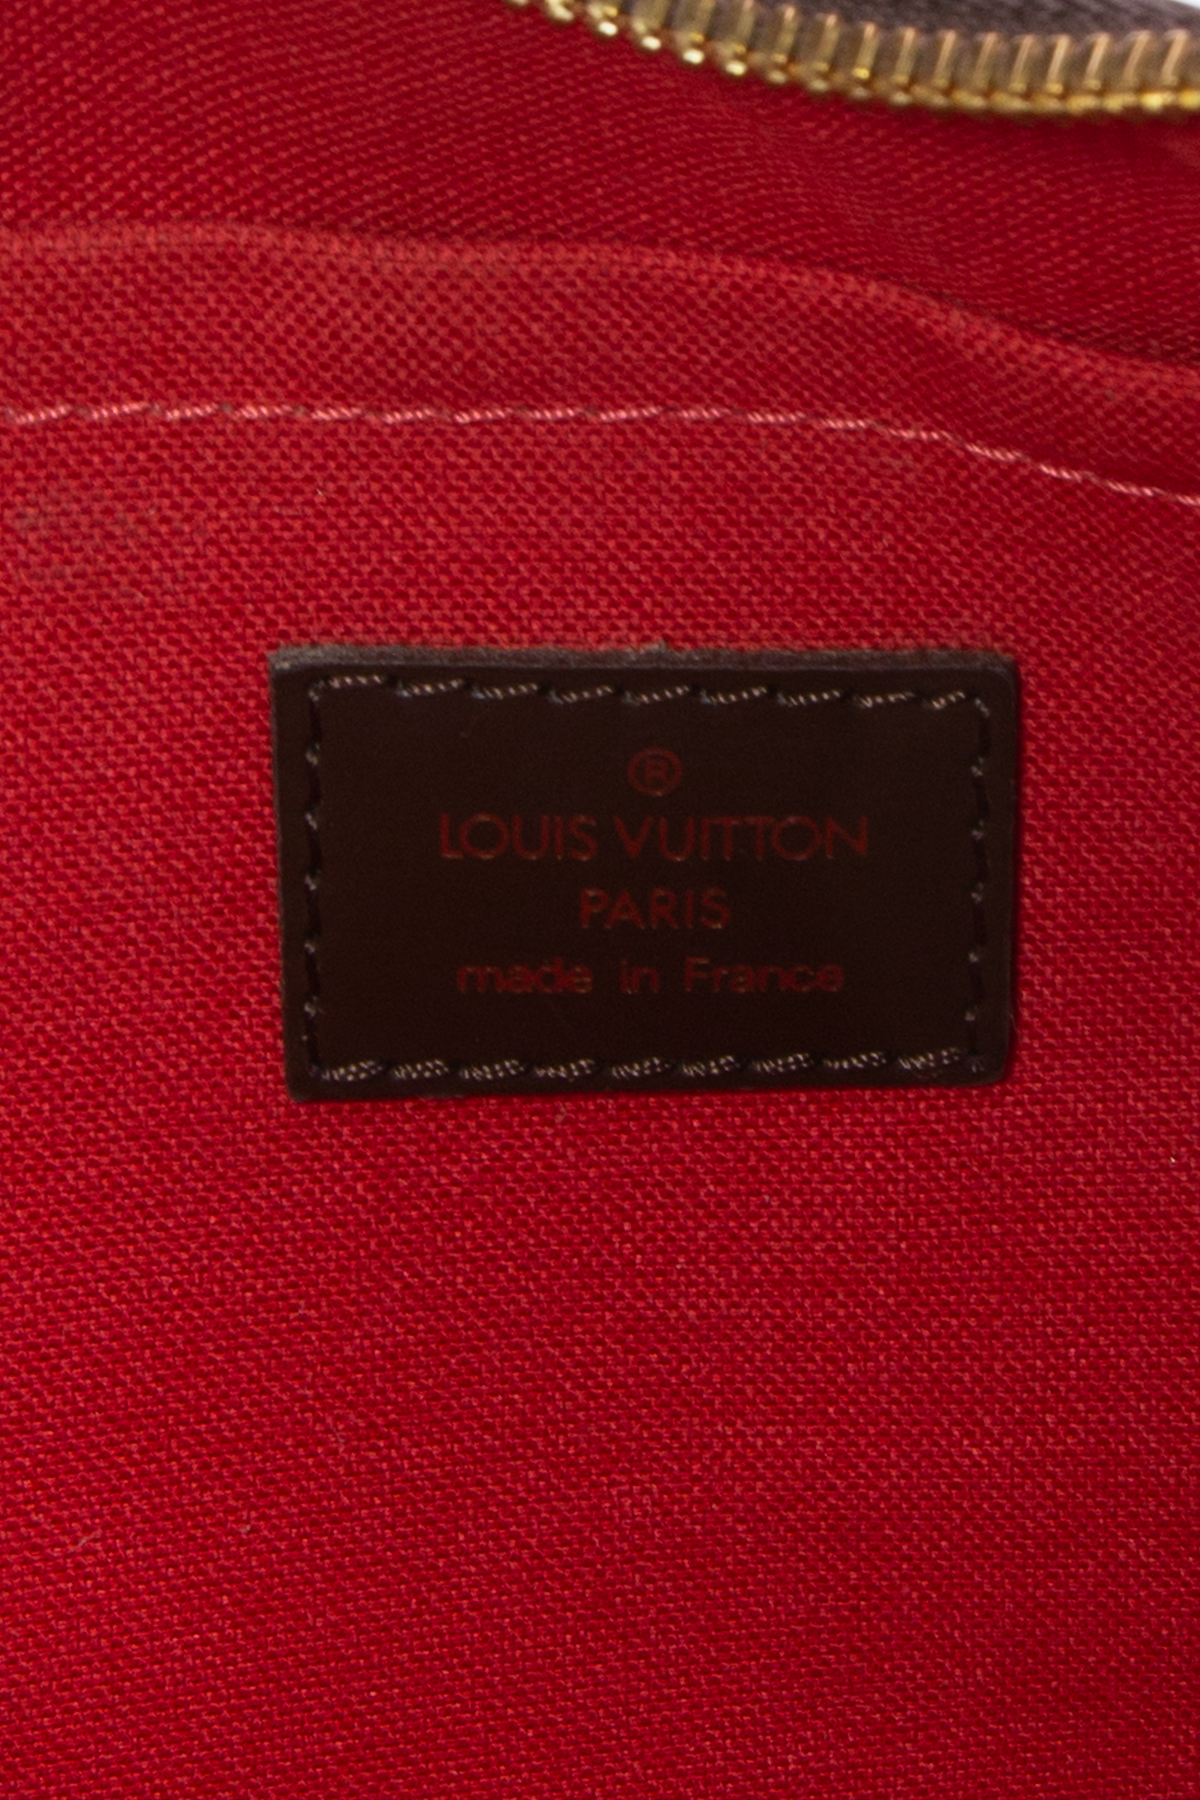 Louis Vuitton Thames PM Bag  Louis vuitton thames, Bags, Louis vuitton